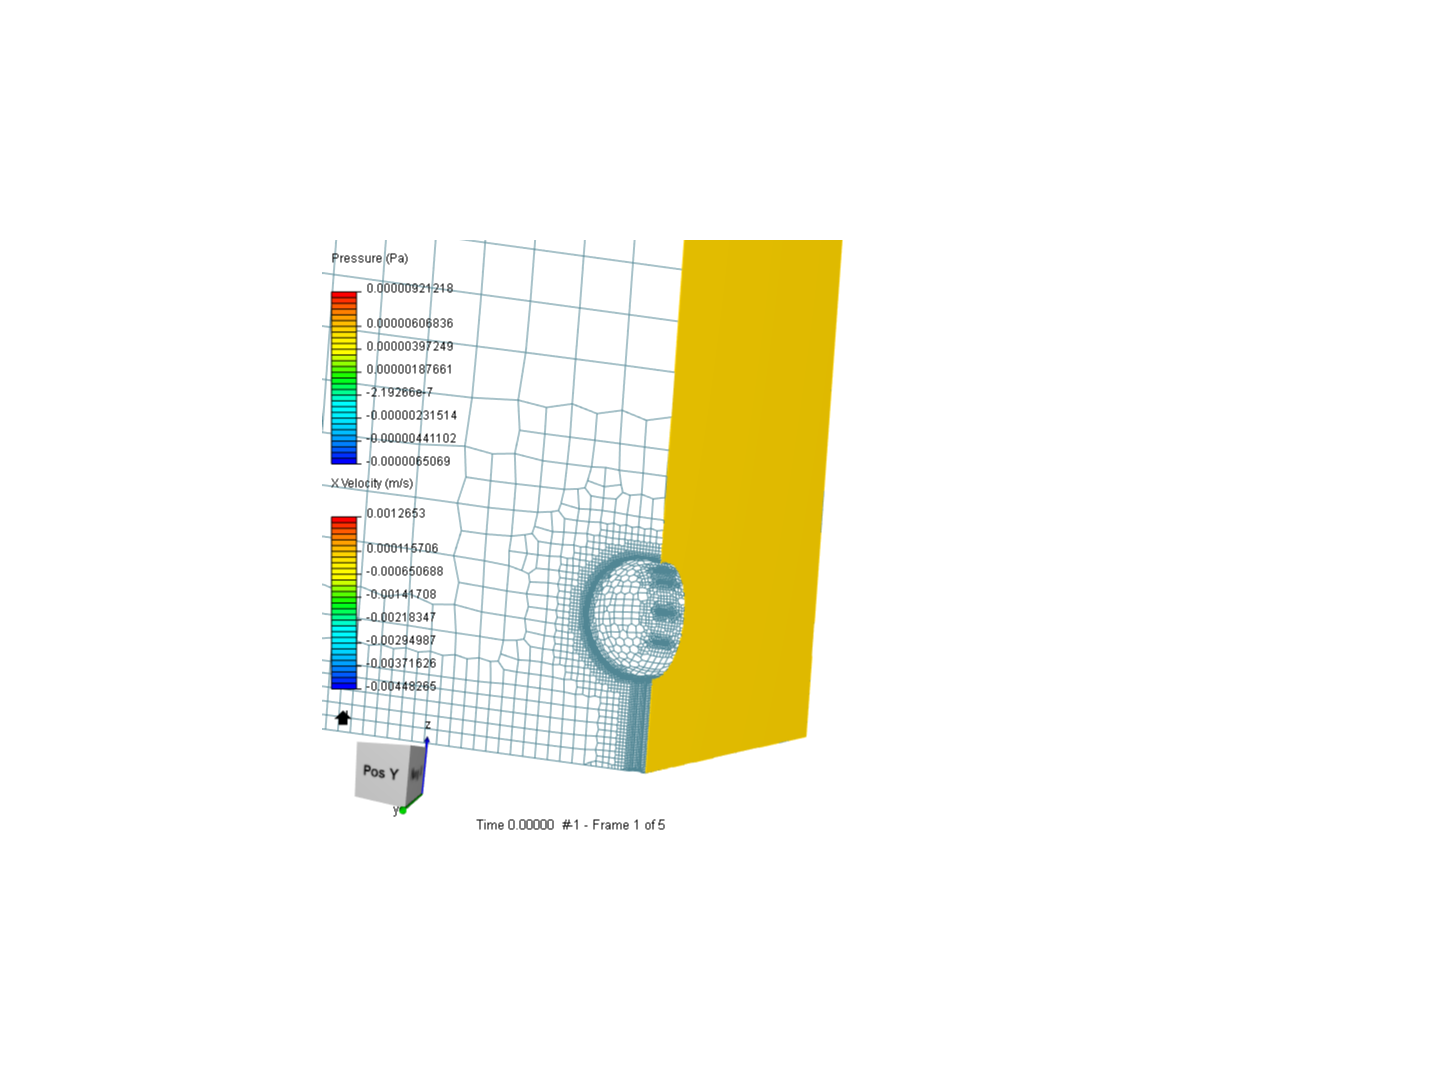 Treeform vs windflow study using incompressible air analysis image